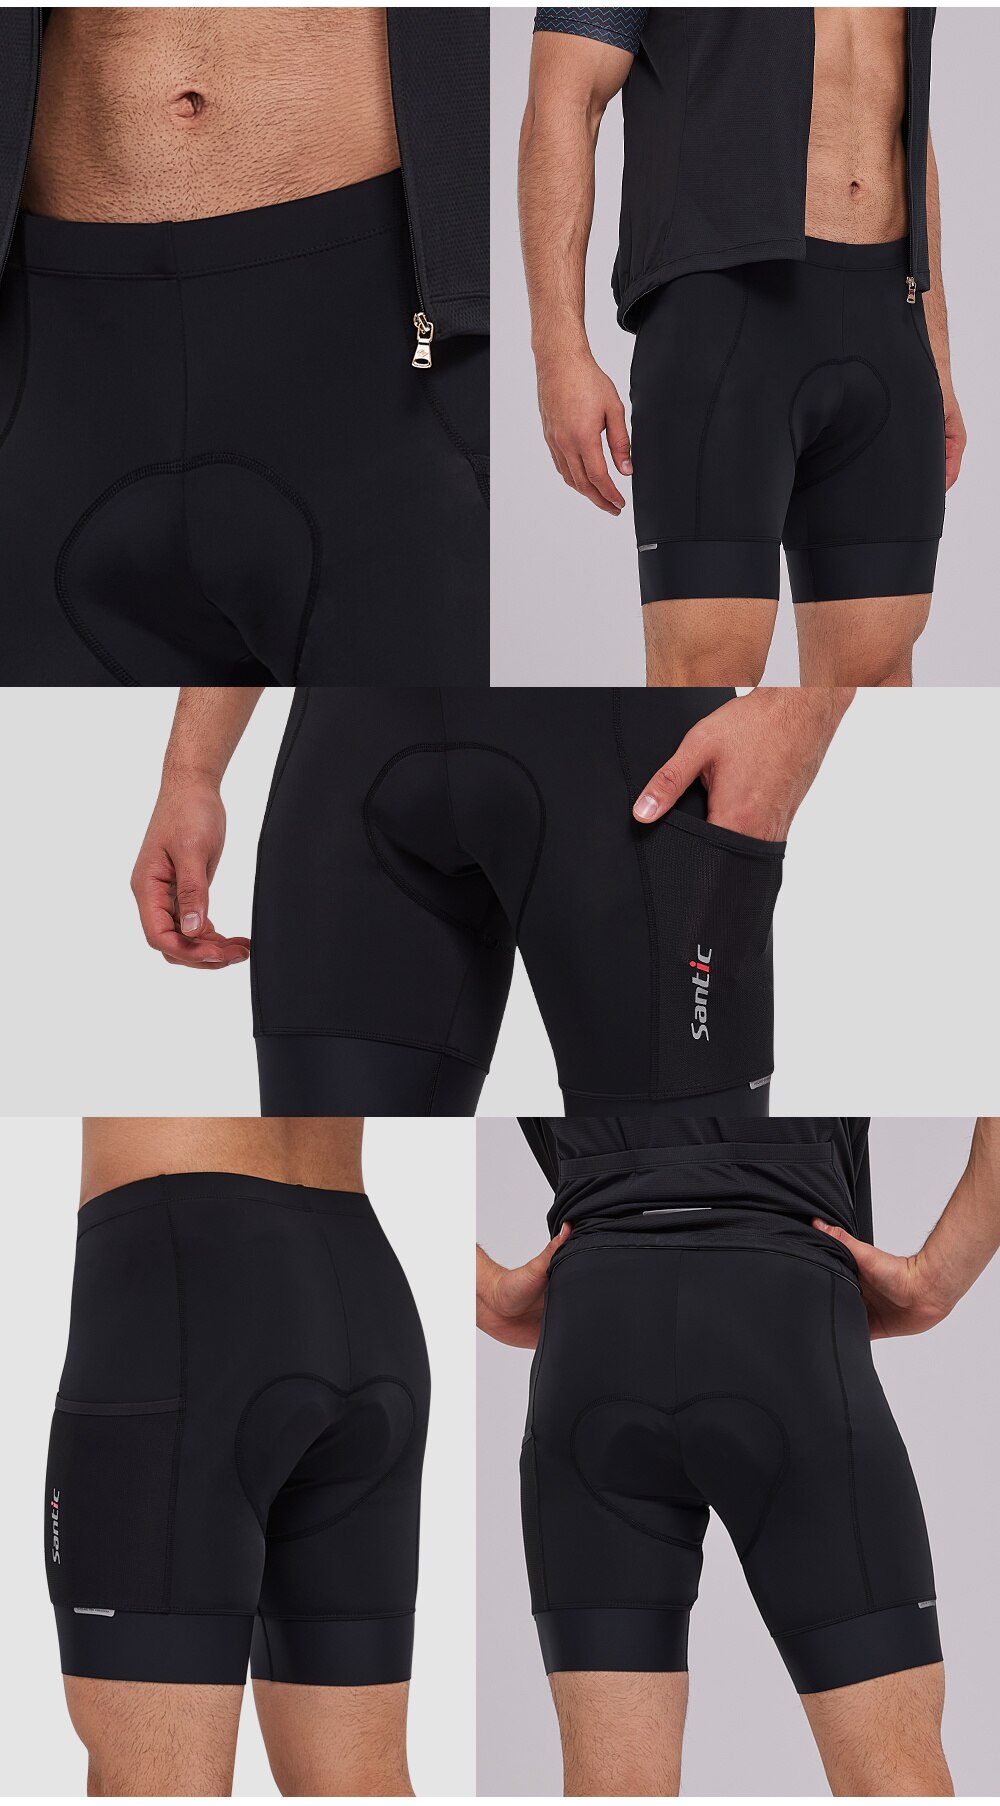 Santic Men's Cycling Shorts 4D Padded Biking Shorts MTB Bicycle Riding Shorts Bike Biking Clothes with Pockets